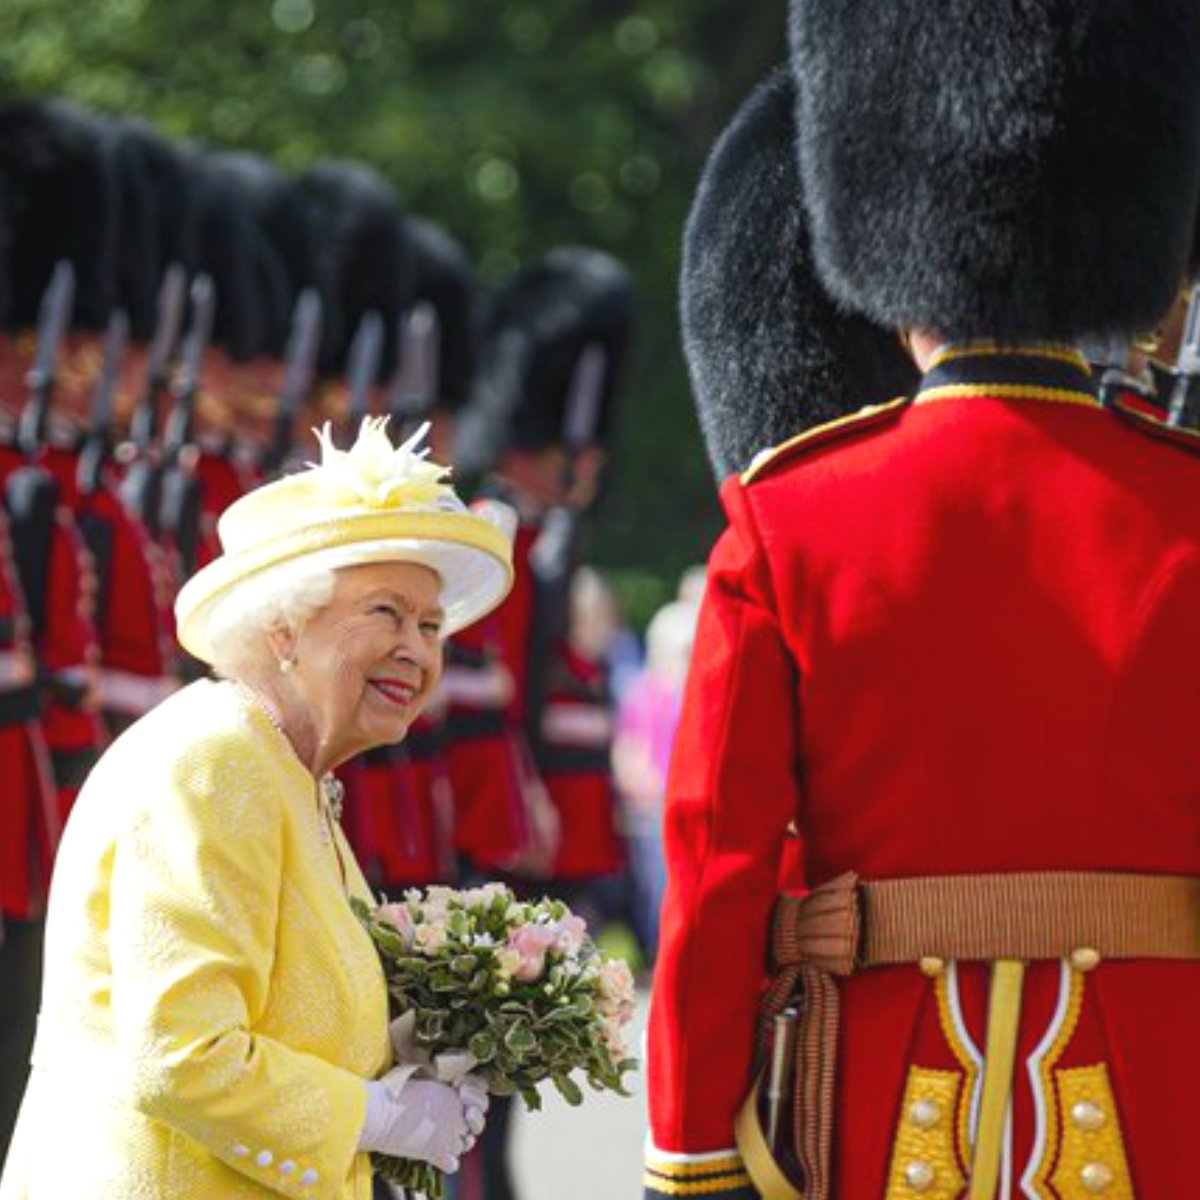 @ArmyScotland @scots_guards @SCOTSband @AlastairBruce_ @RoyalFamily @ArmyInLondon @Householddiv @ArmyComd51X @edingar @EdinburghMajor @BFBSScotland @BritishArmy 🙂 What a beautiful photo! Elegant Queen! I love this smile 💛👑